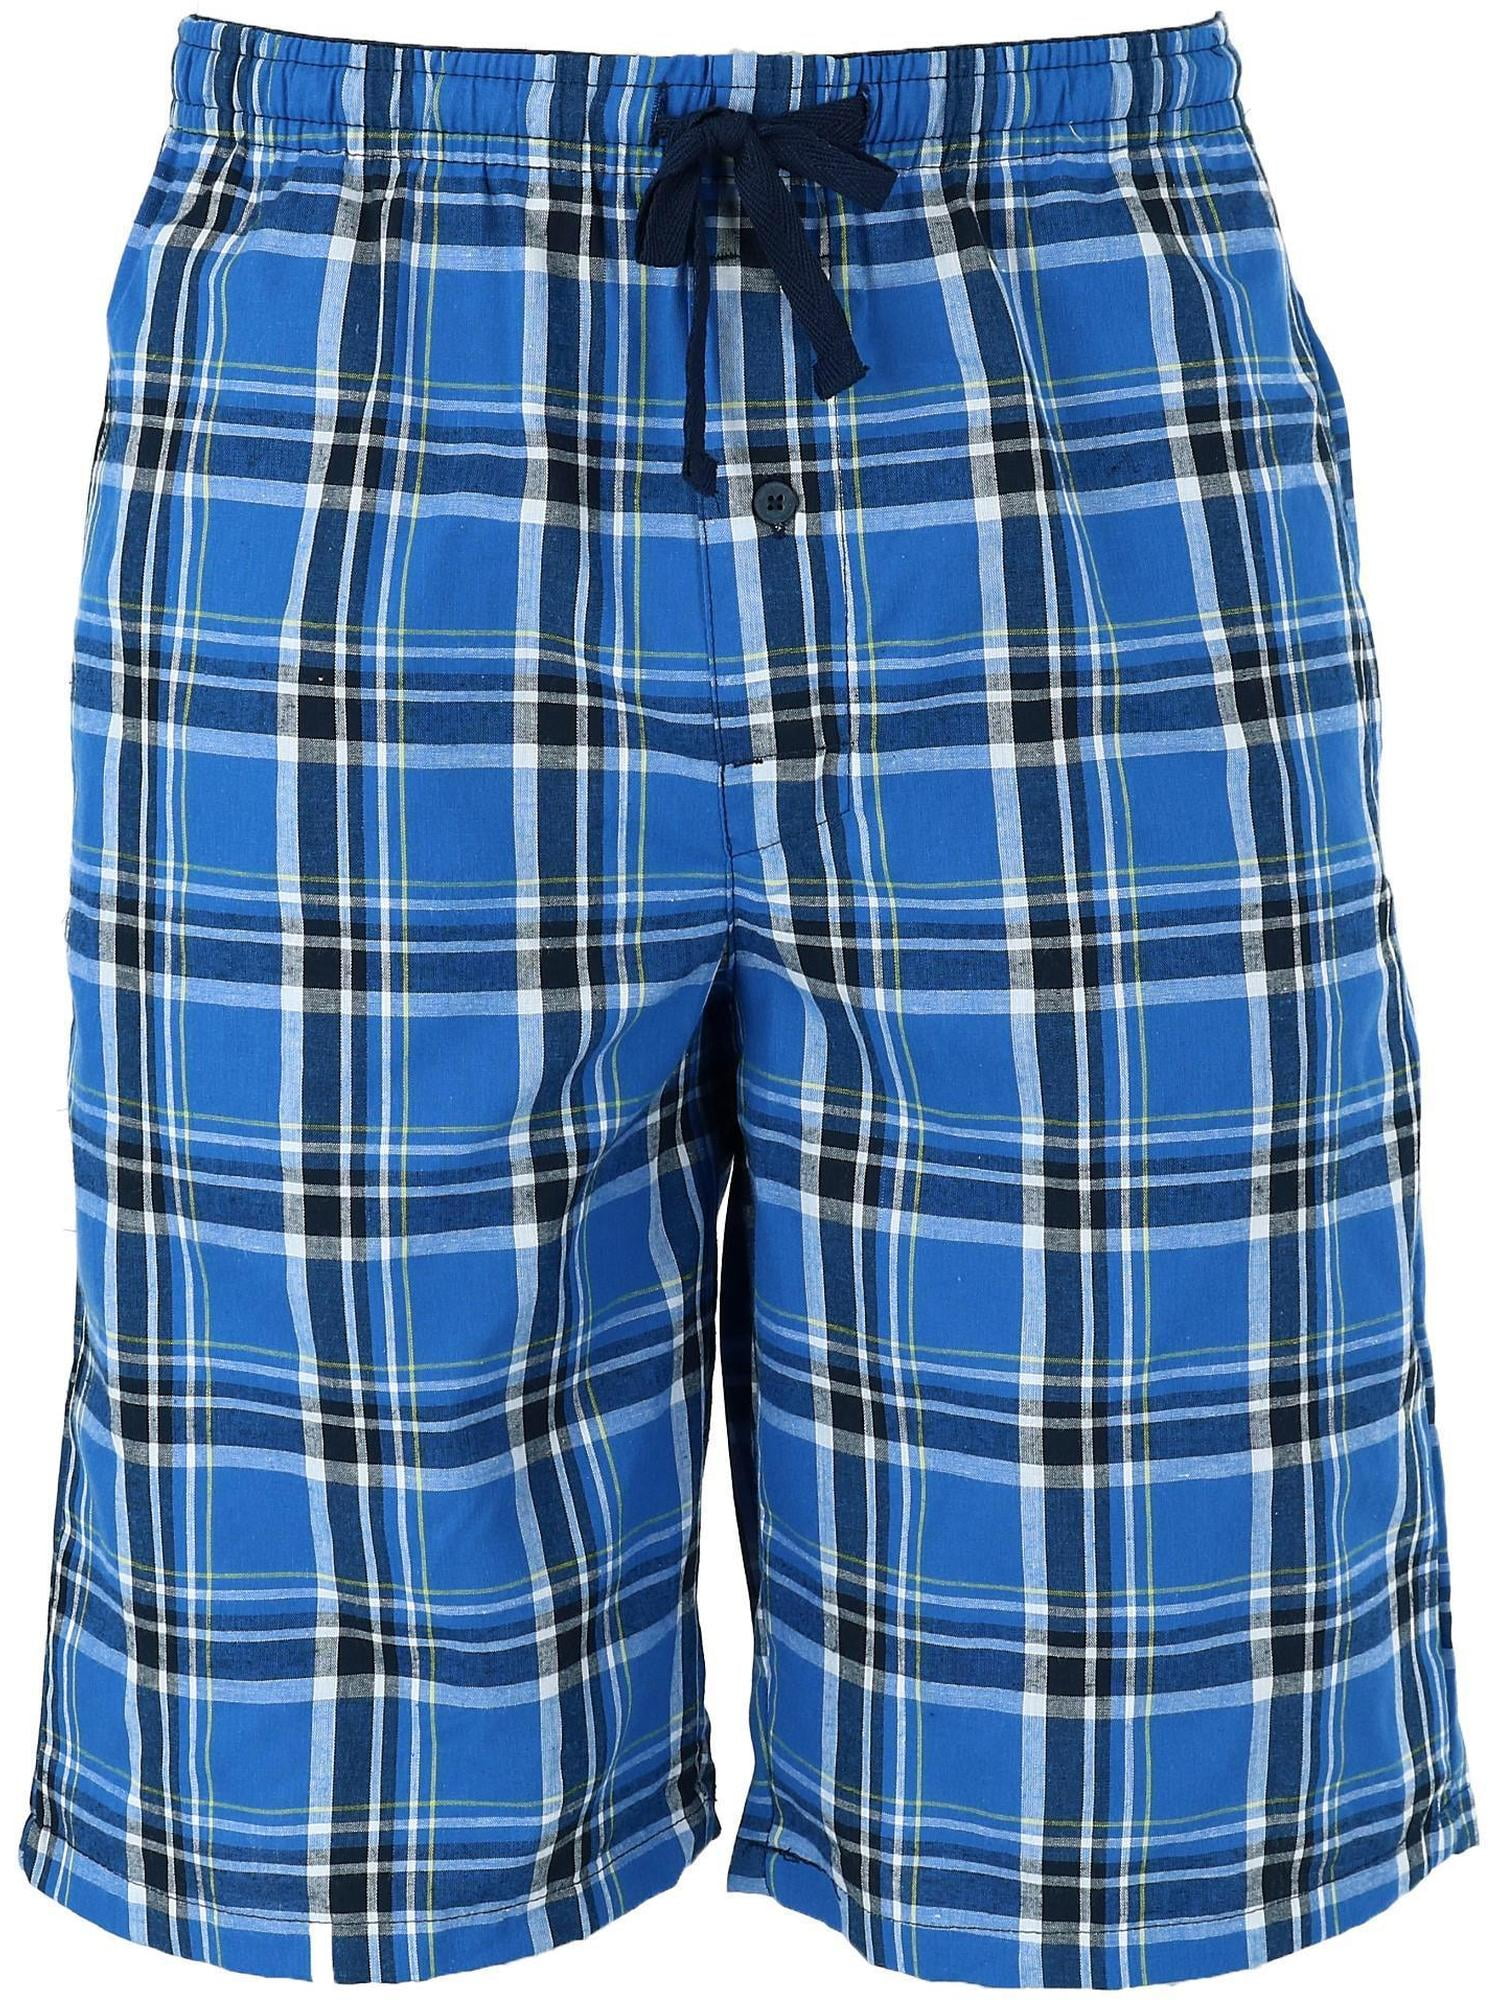 Hanes Madras Sleep Pajama Shorts (Men Big & Tall) - Walmart.com